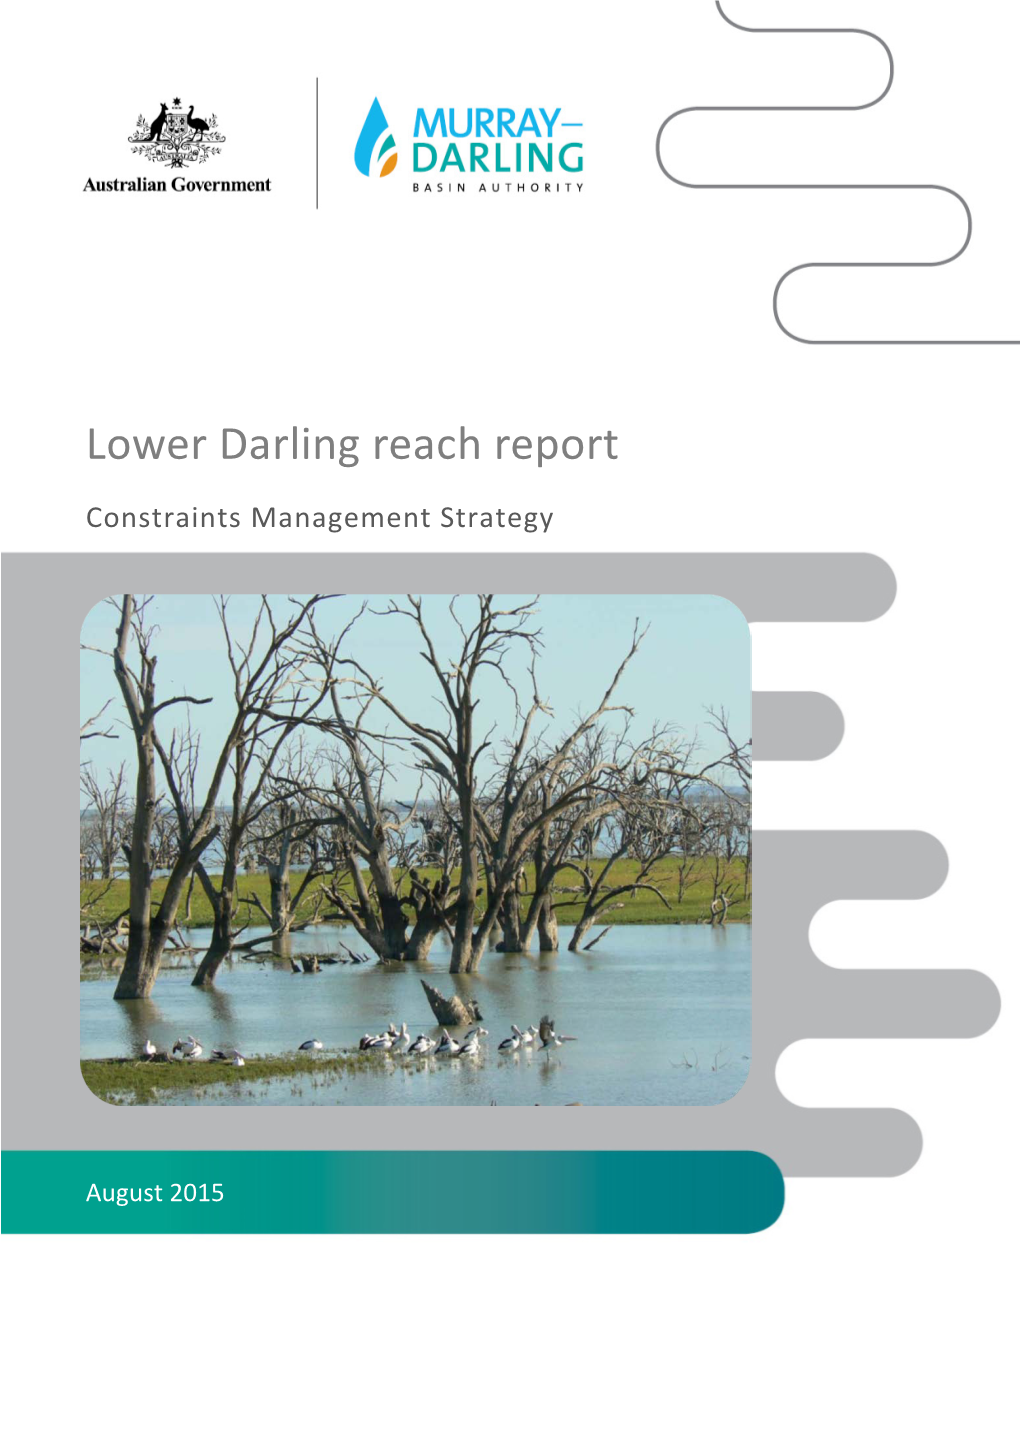 Lower Darling Reach Report